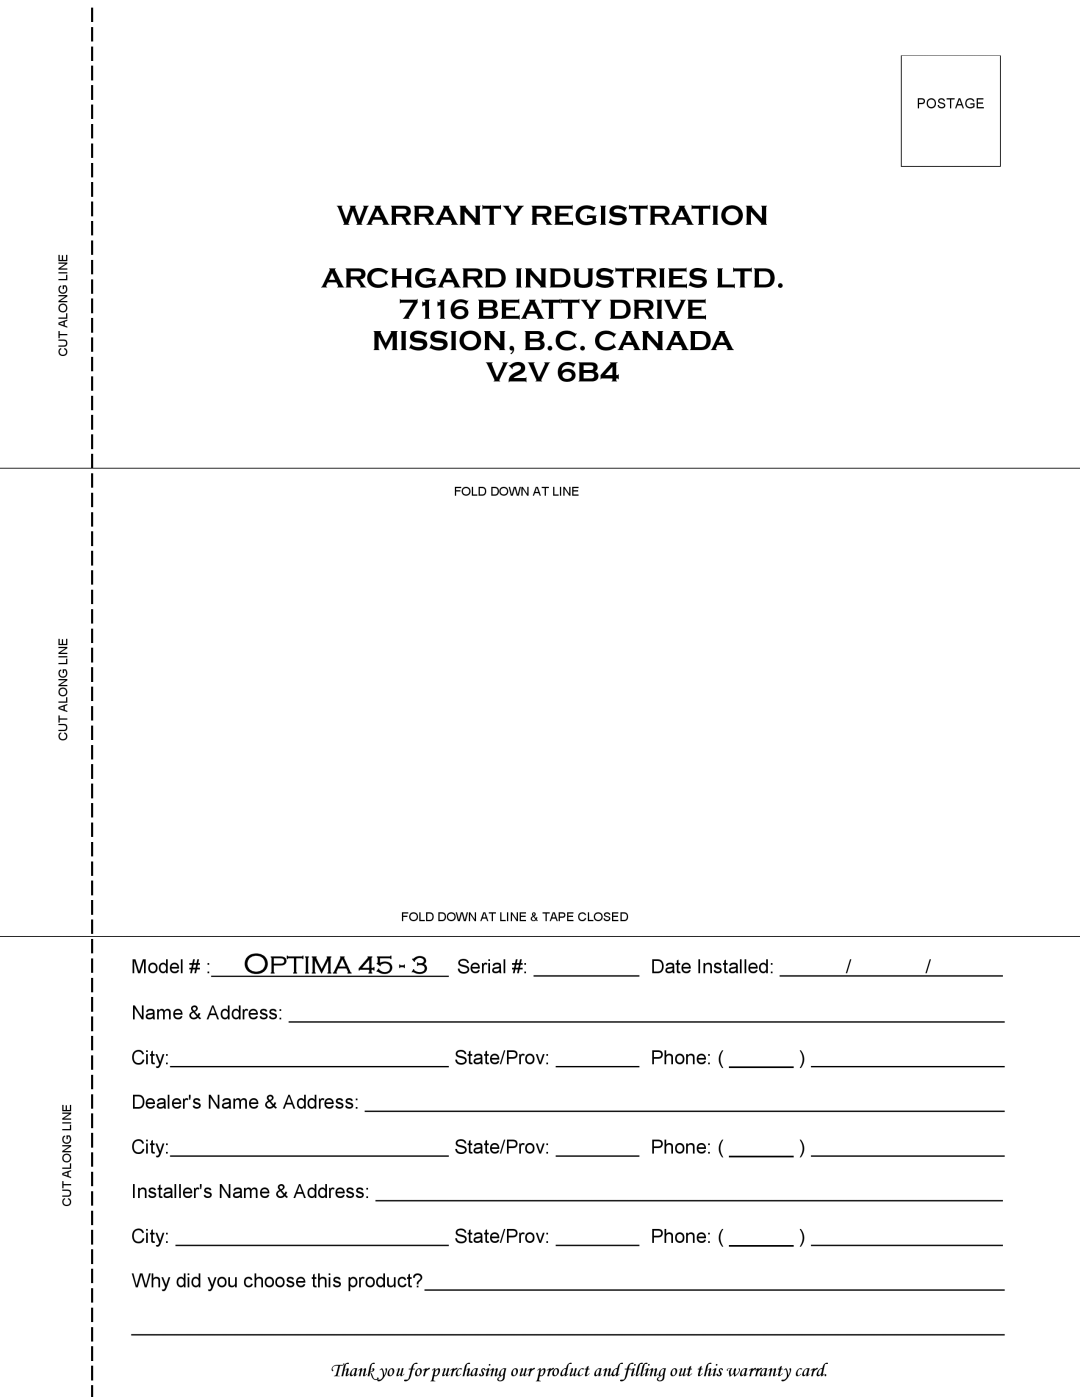 Optima Company 45 - 3 manual BEATTY DRIVE MISSION, B.C. CANADA V2V 6B4, Model # OPTIMA 